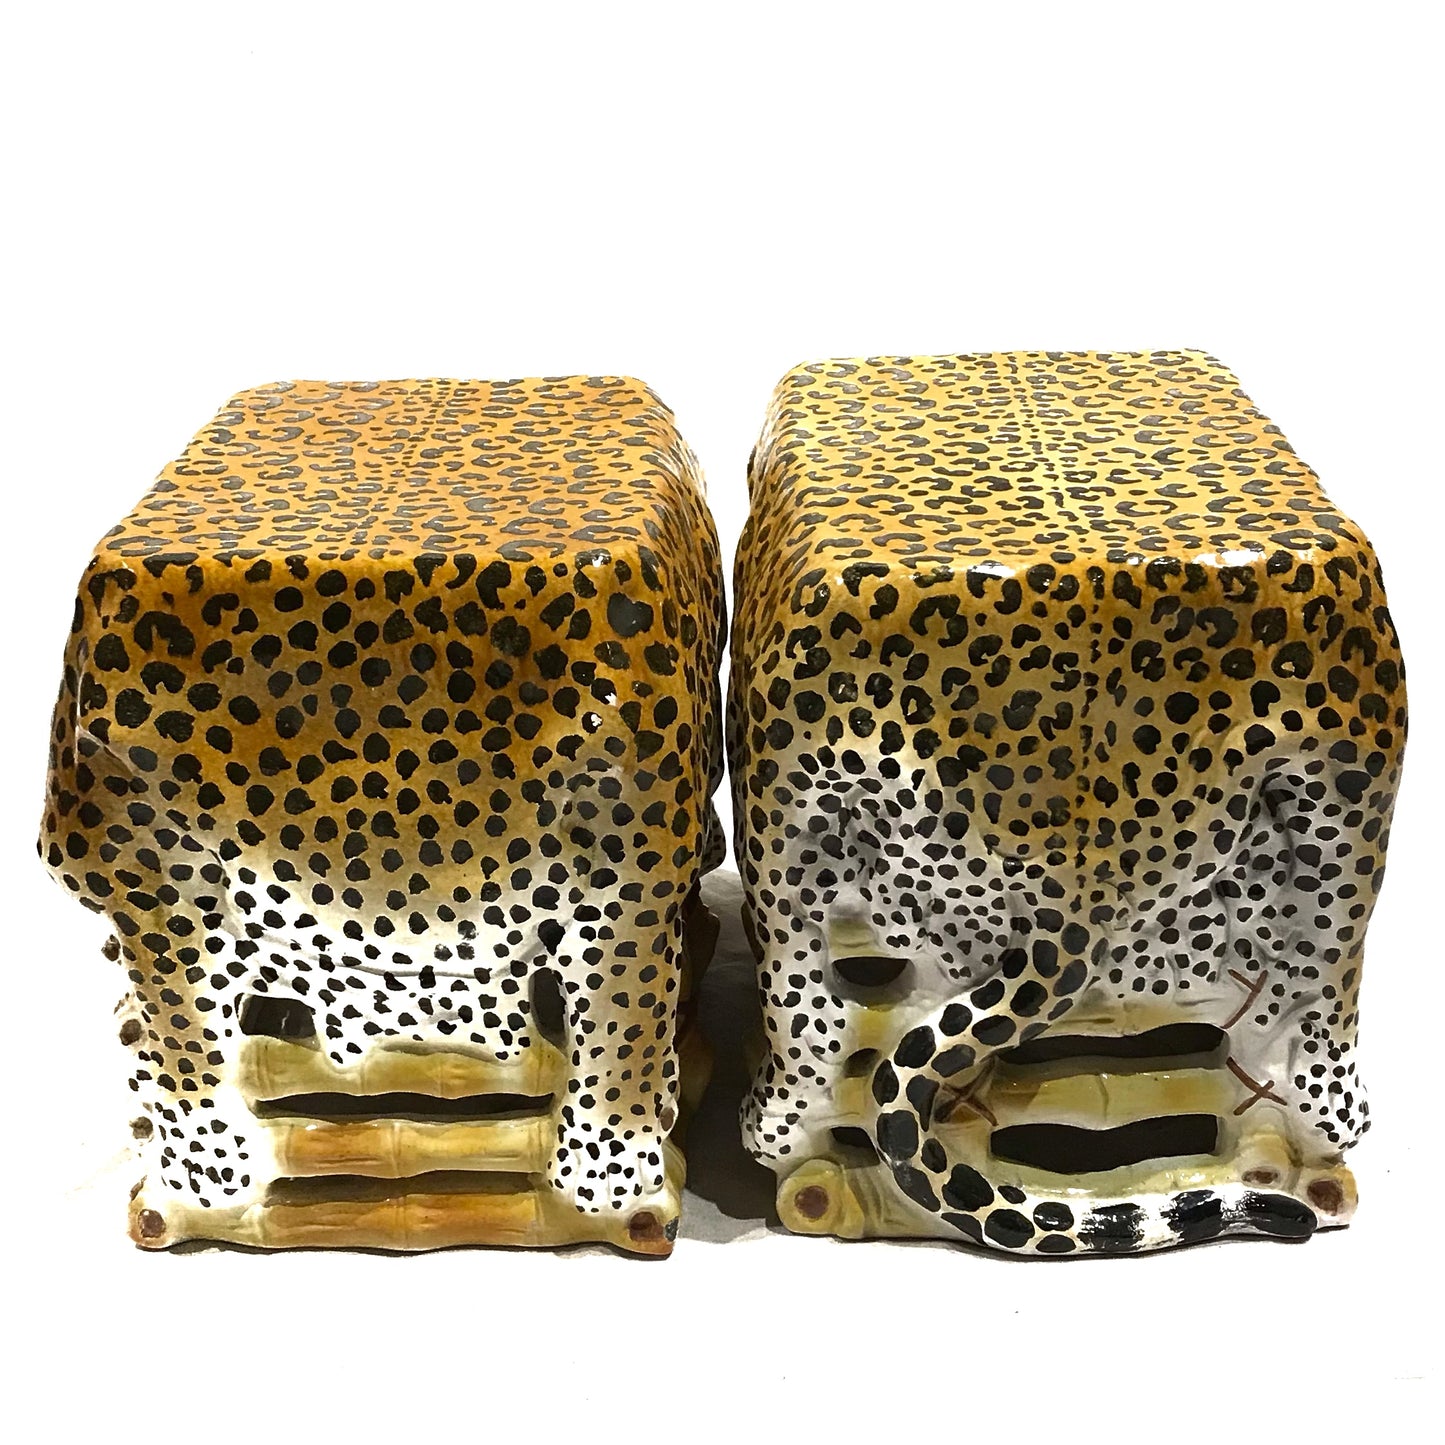 Pair of Italian Leopard Stools